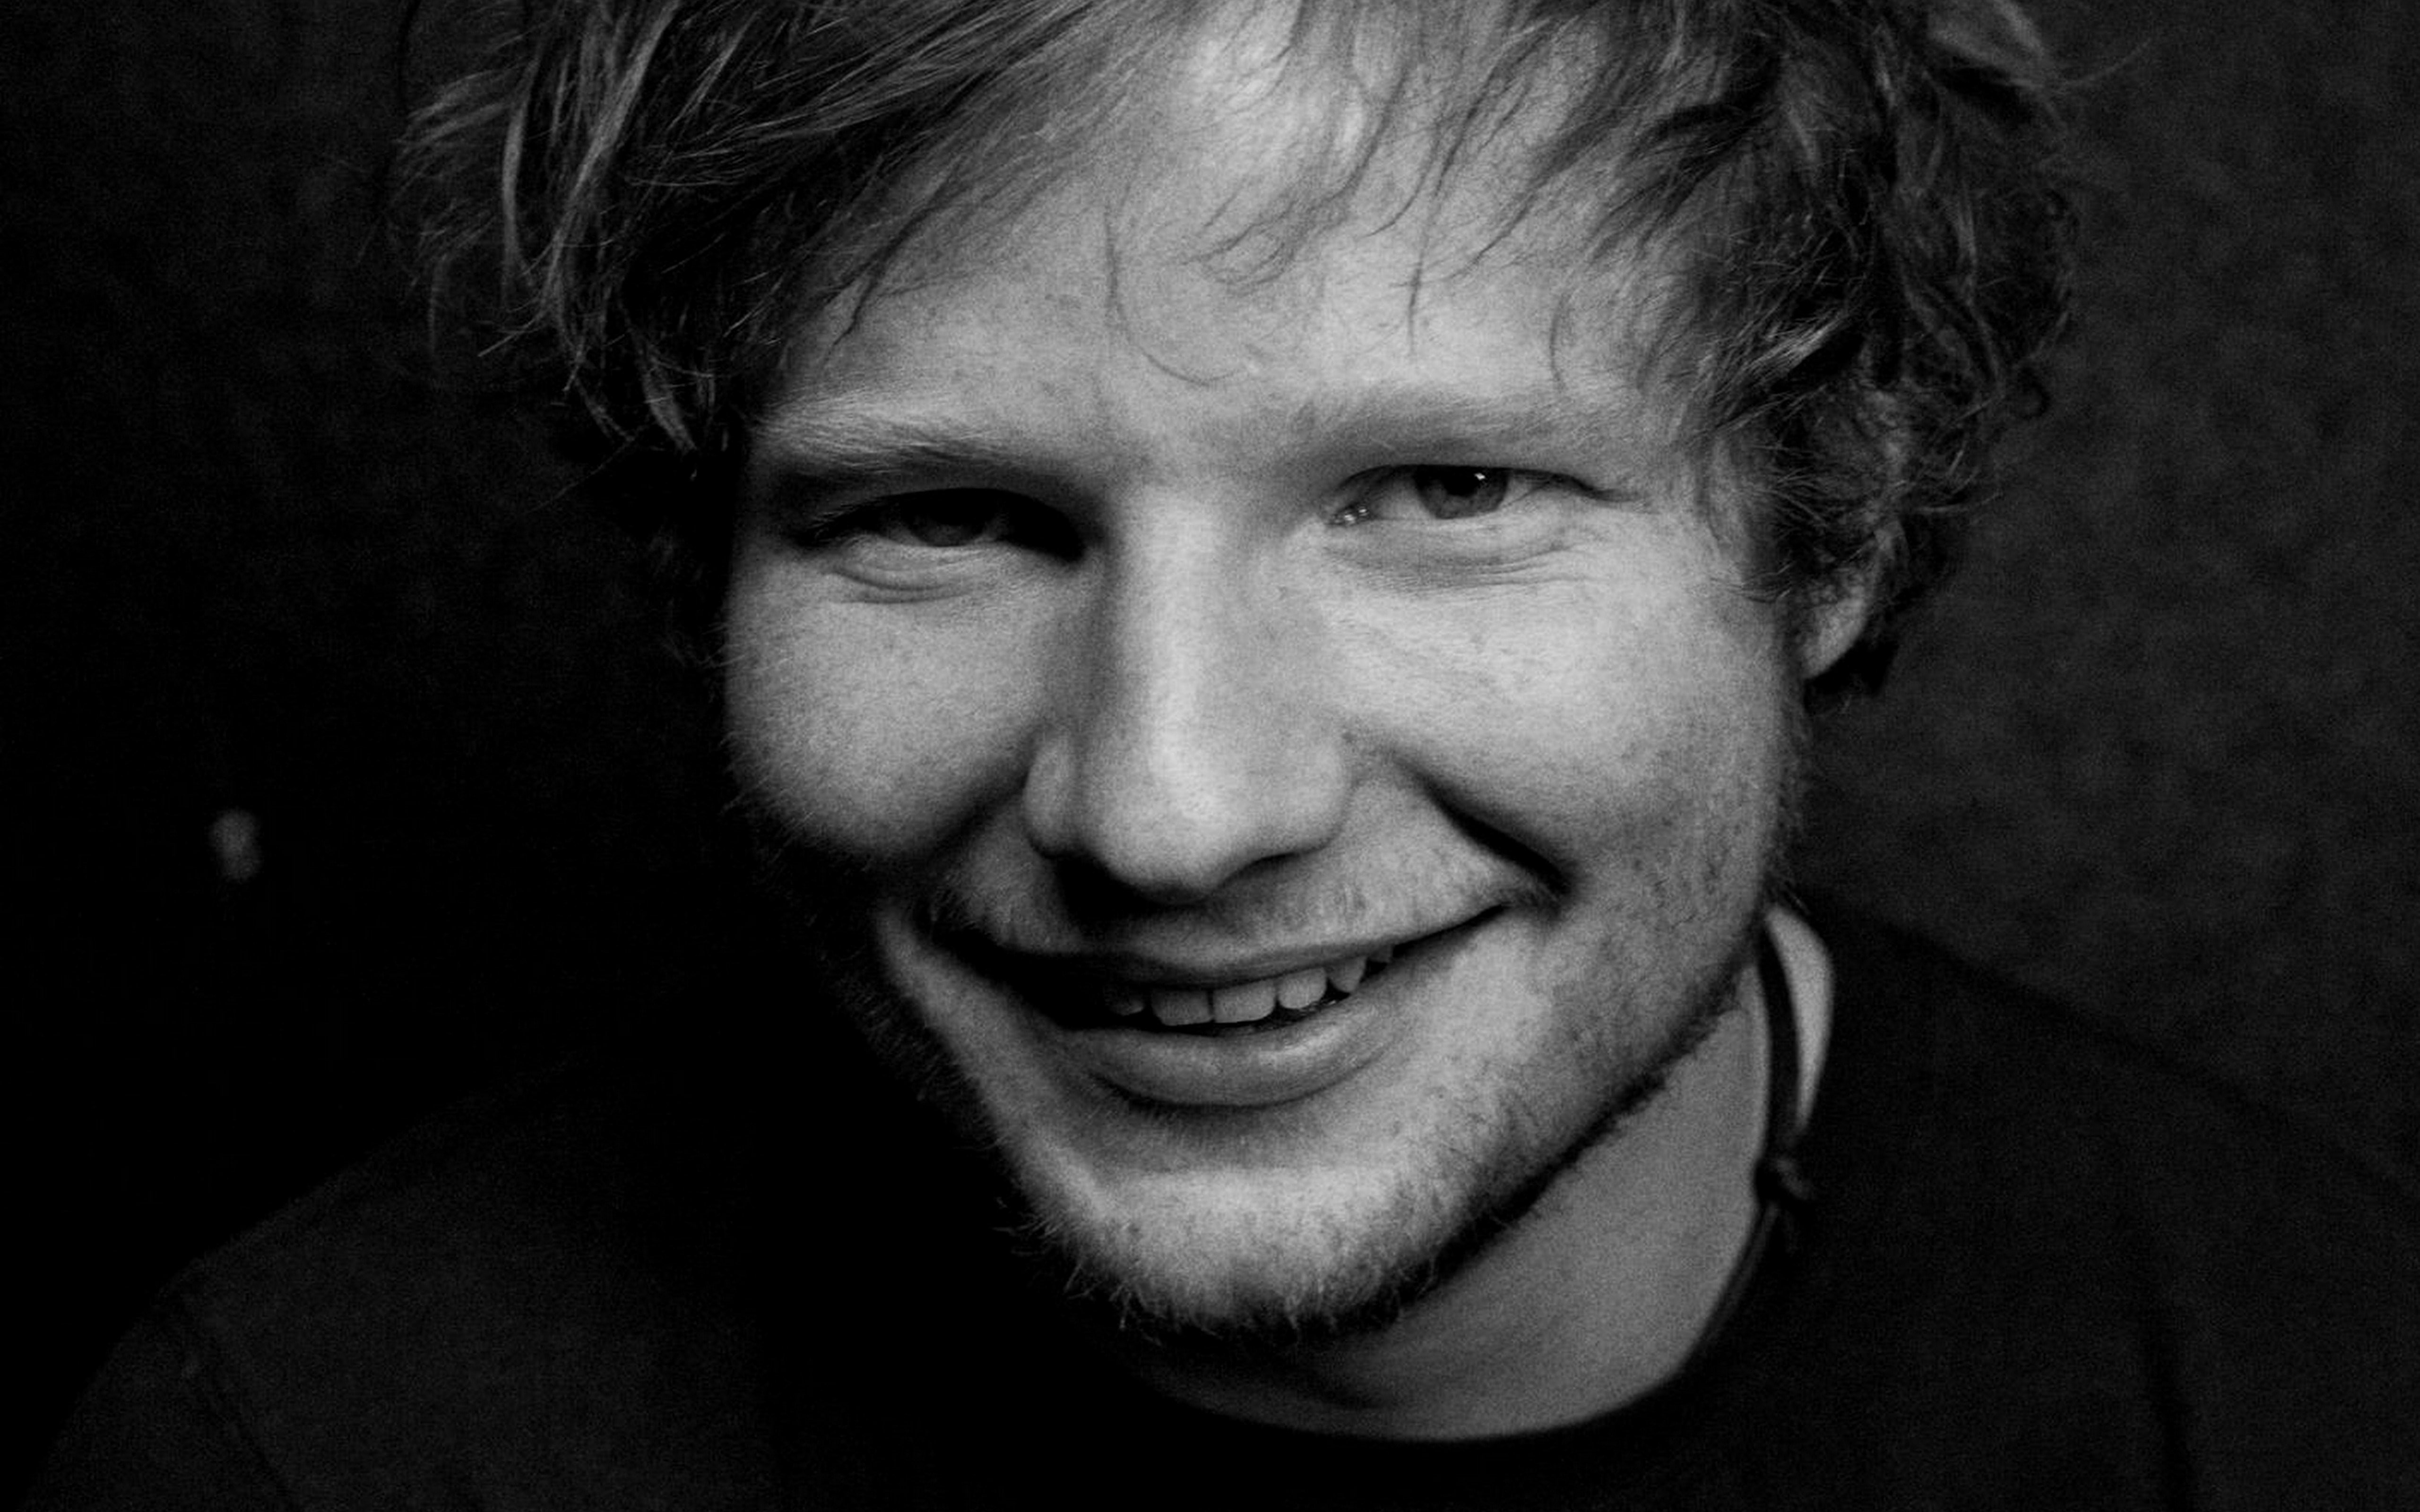 ed sheeran, portrait, headshot, smiling, looking at camera